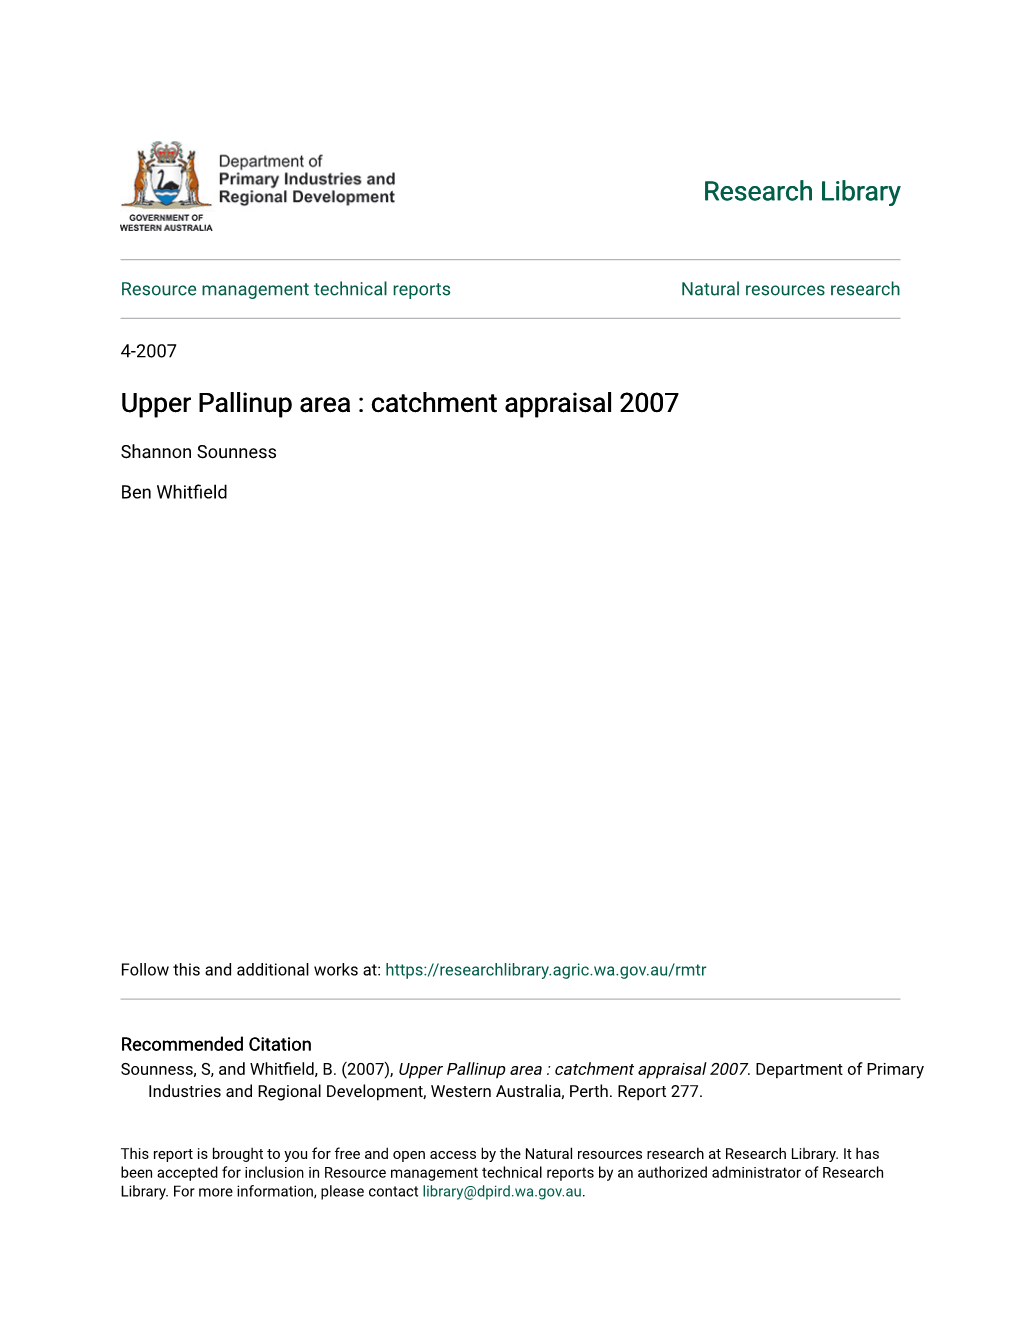 Upper Pallinup Area : Catchment Appraisal 2007